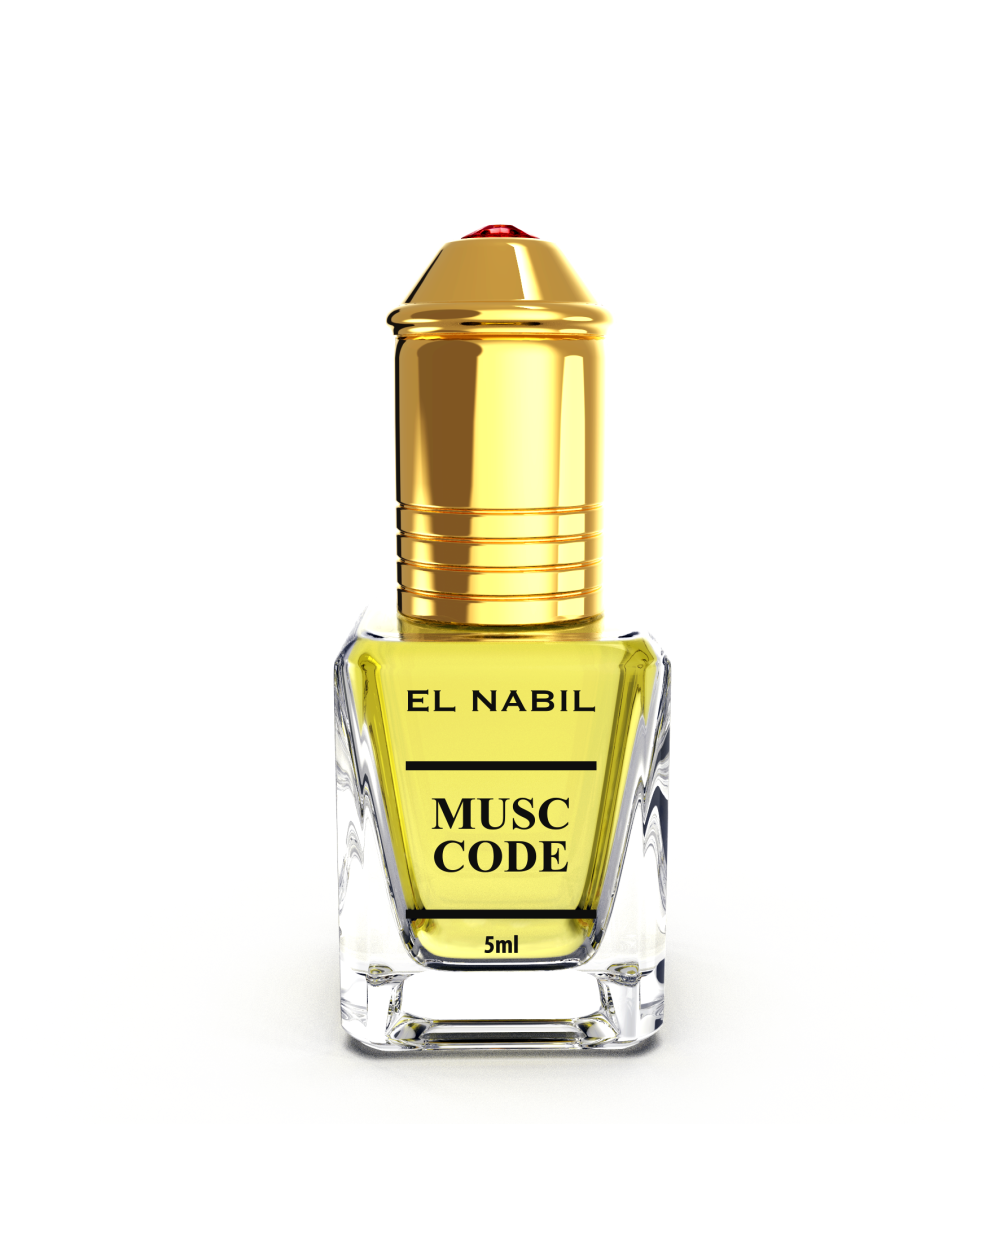 Musk El Nabil perfume Code 5ml